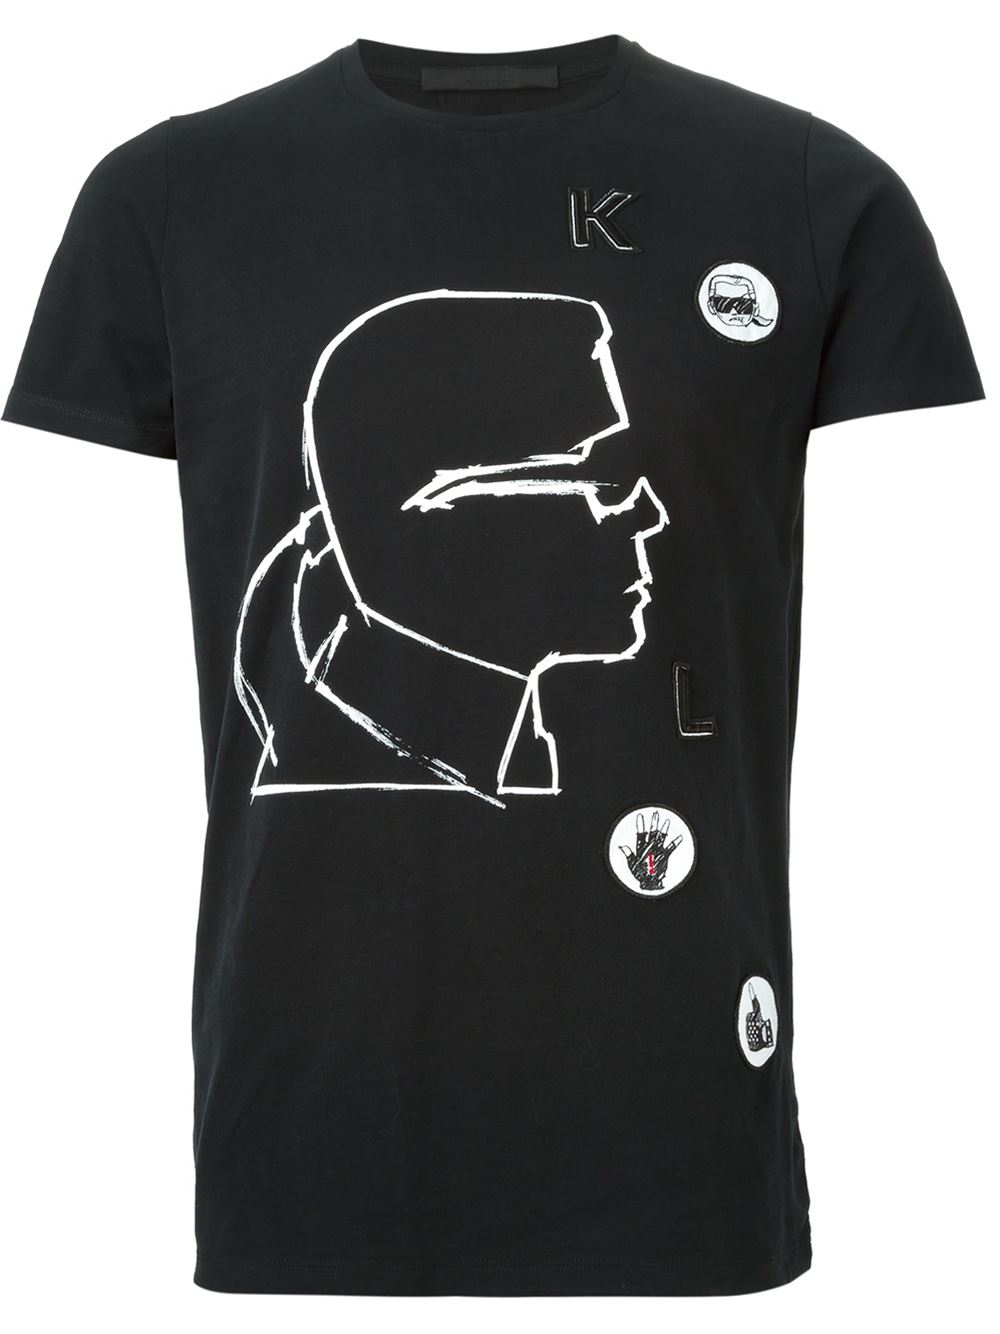 Karl lagerfeld Sketched Karl Print T-shirt in Black for Men | Lyst